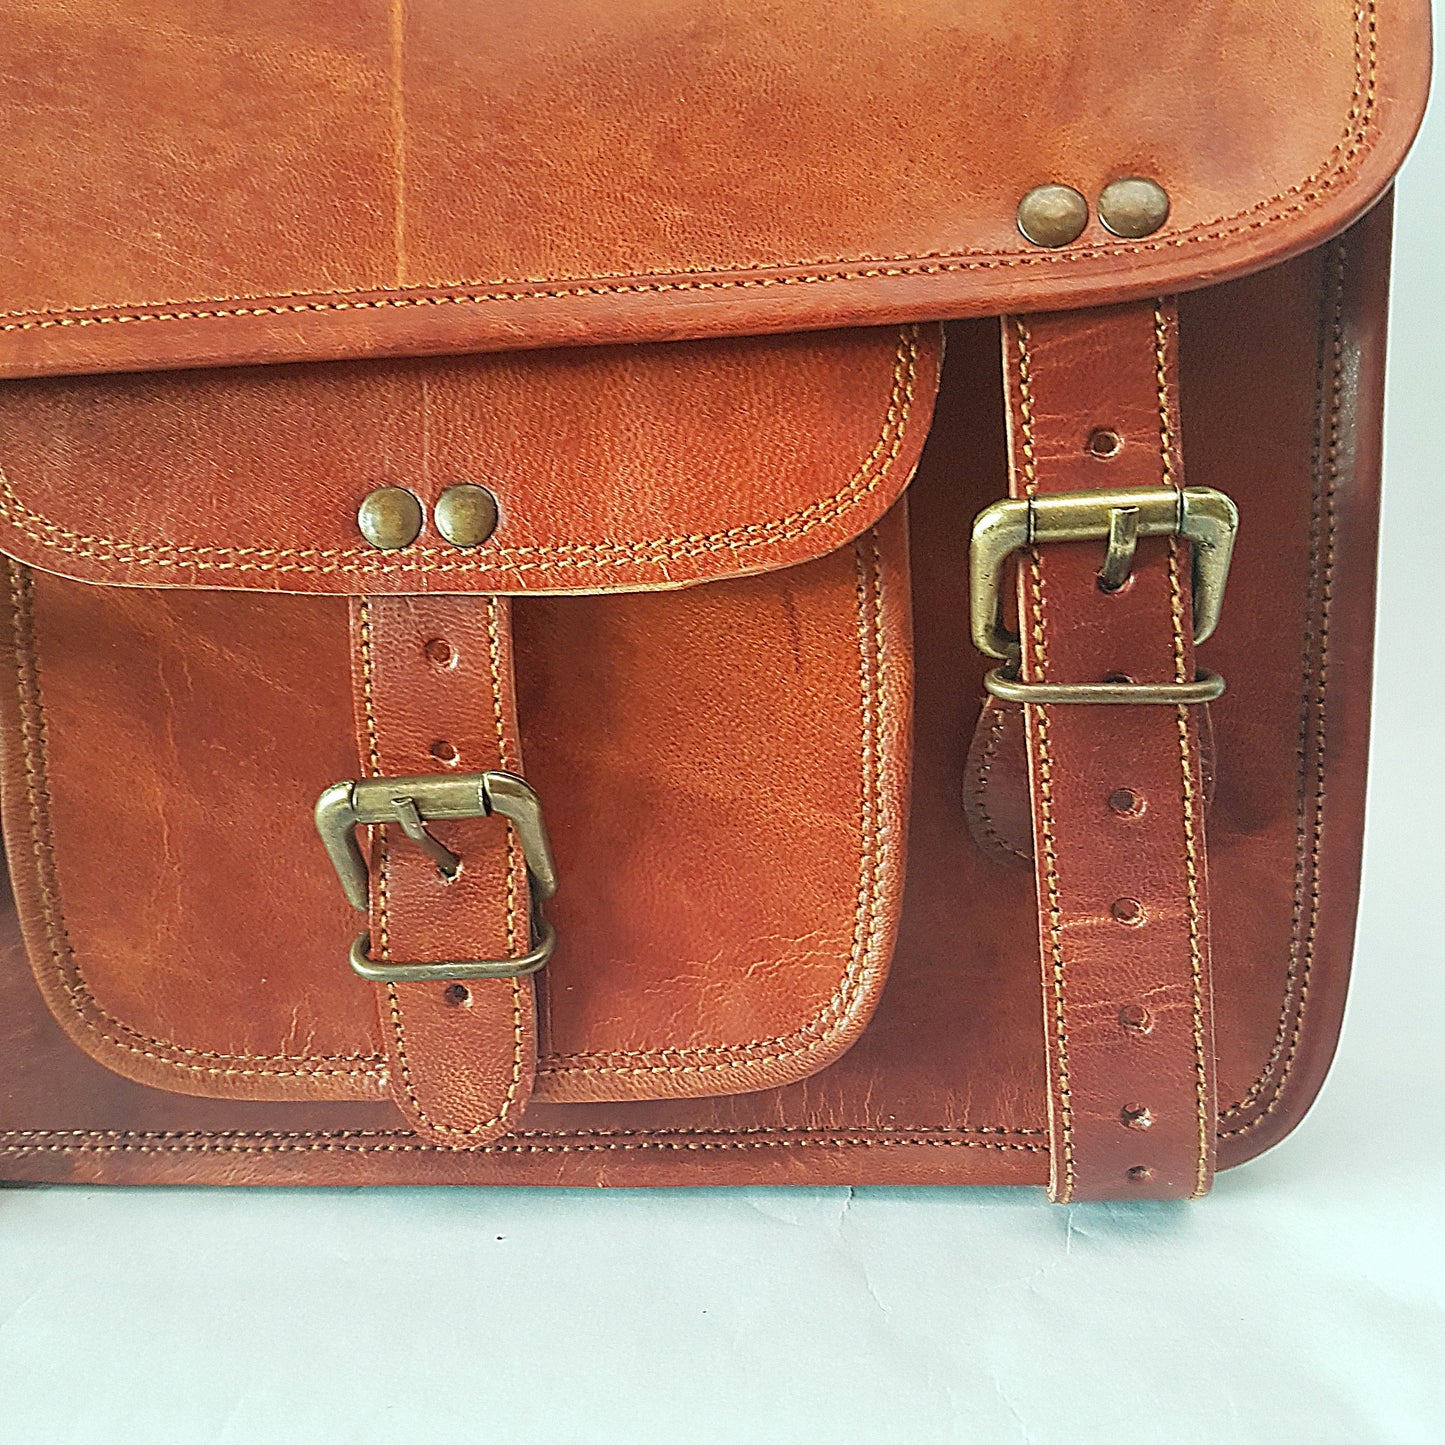 Leather Messenger Shoulder Bag 9 by 11 inches